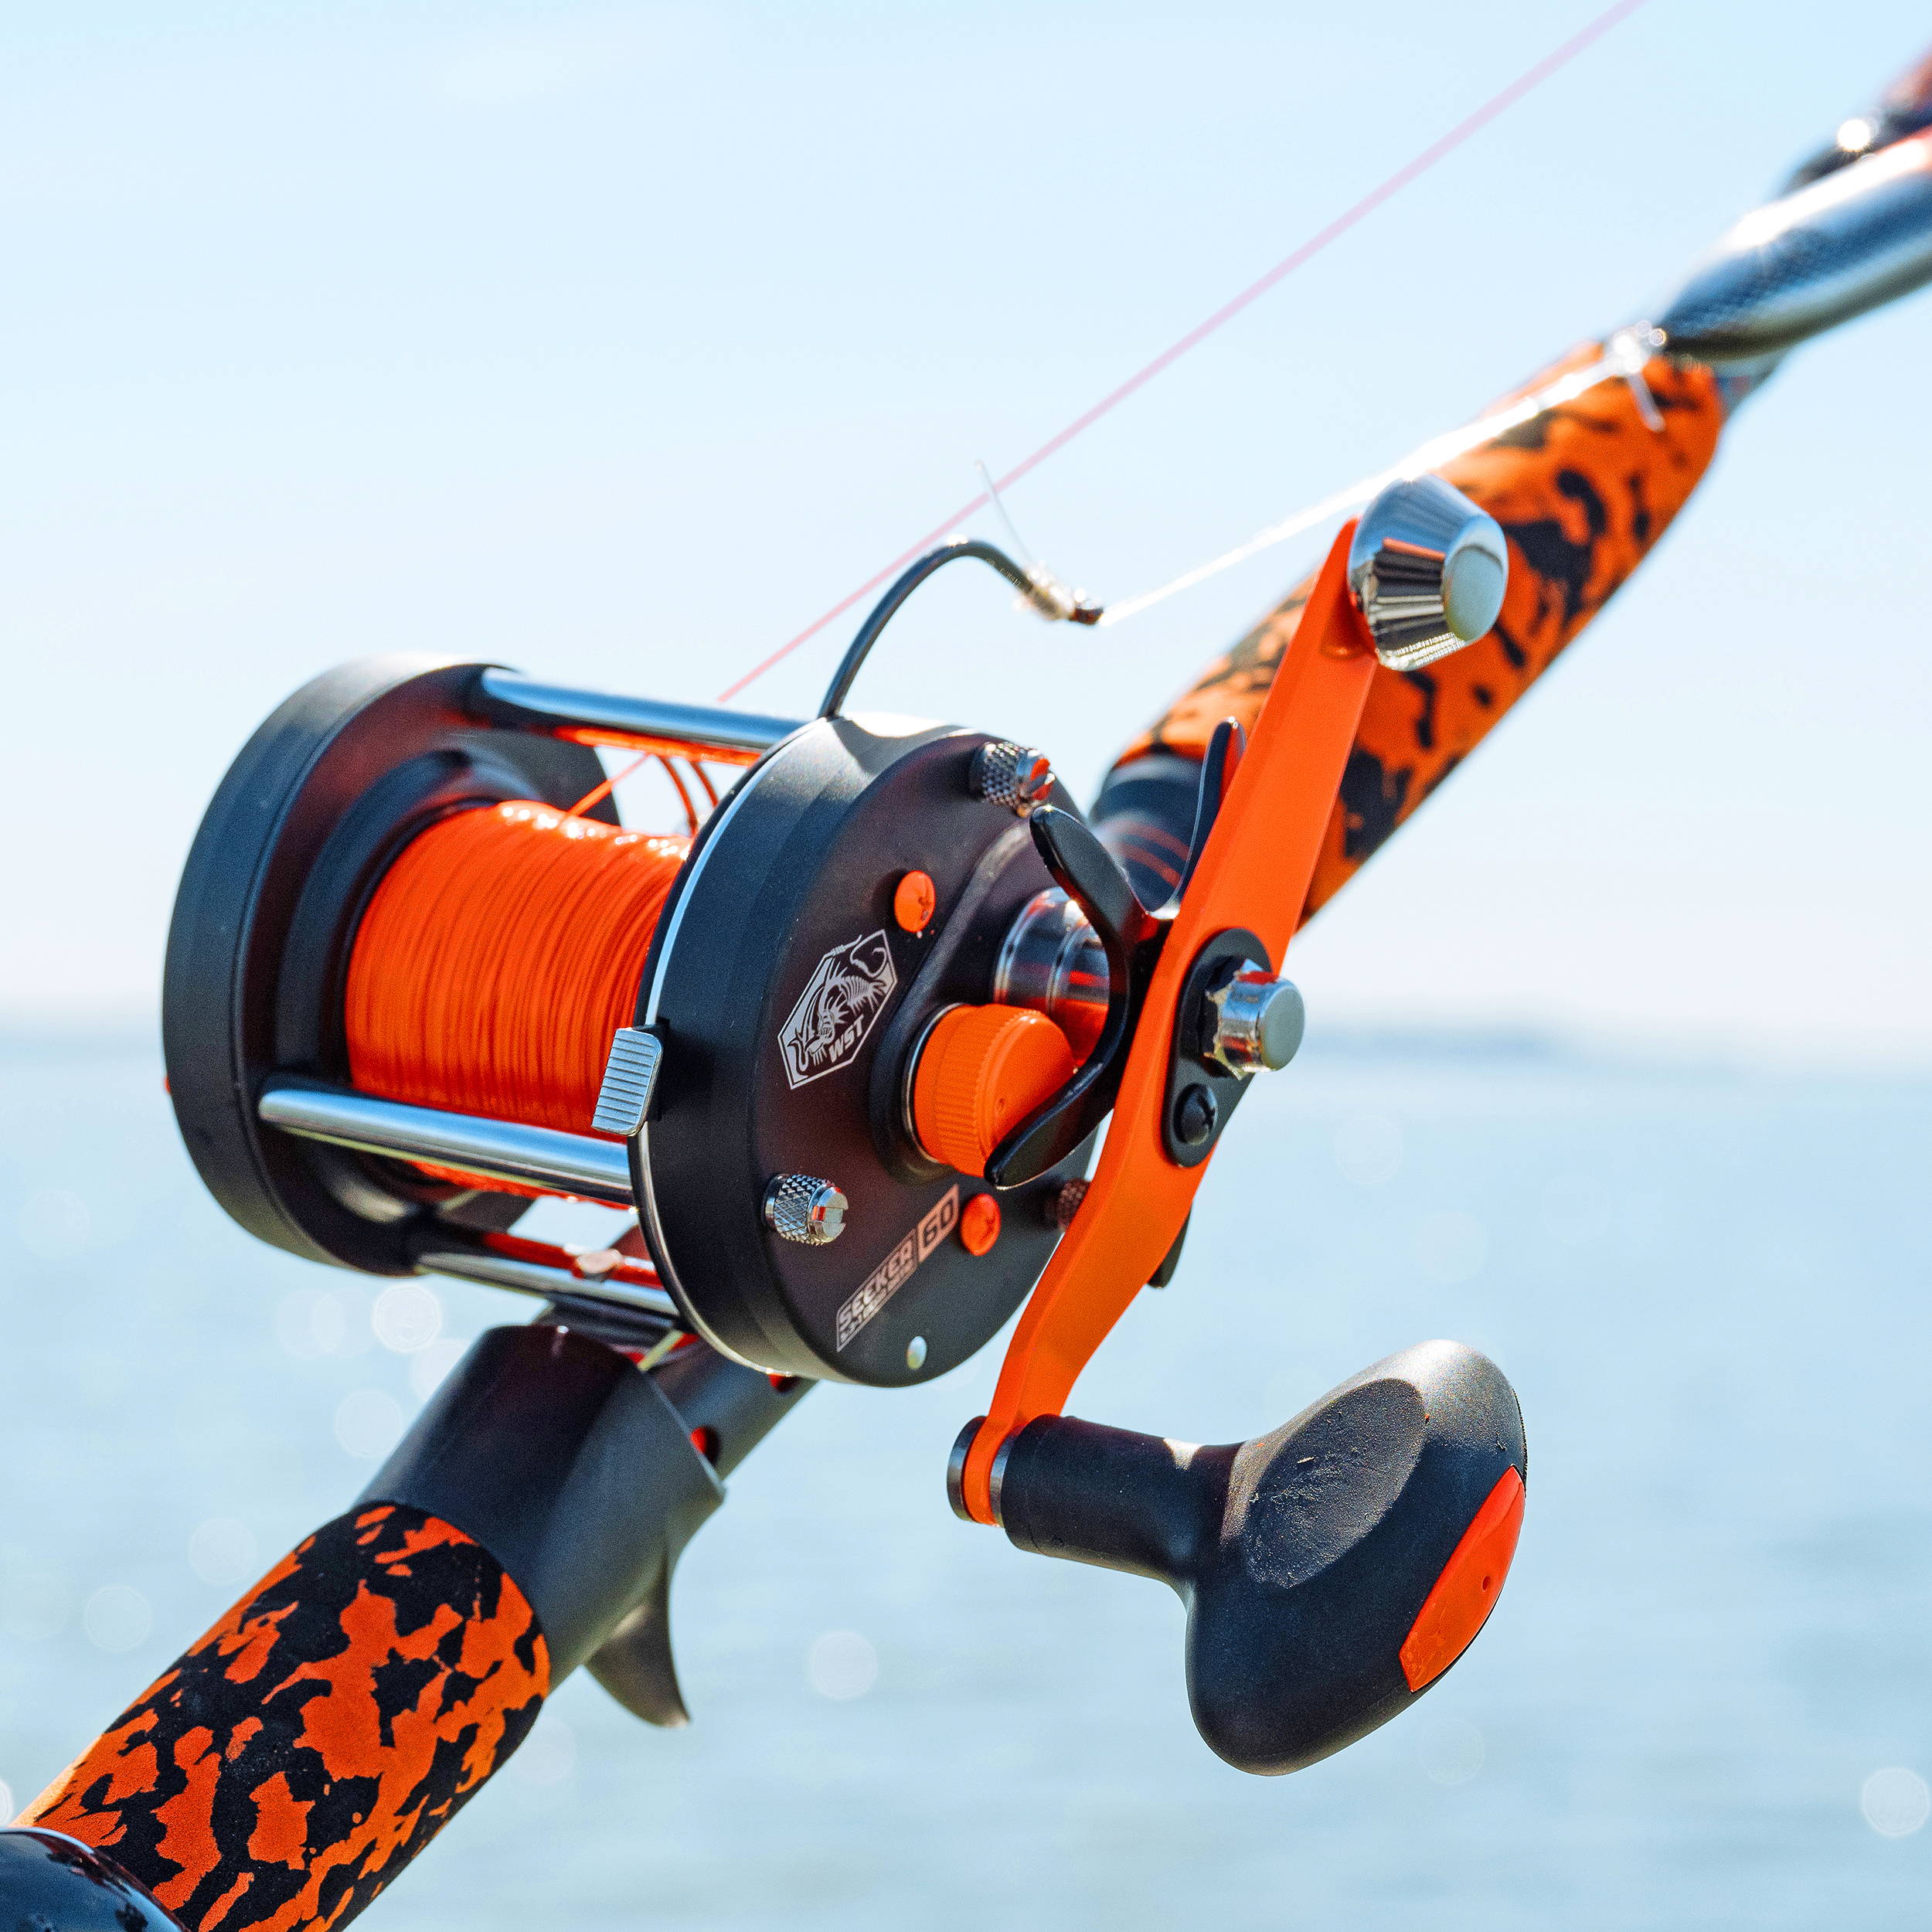 The Seeker 60 baitcast reel with the RAK kit in blaze orange outfitted on the Hog Seeker Catfish Rod.